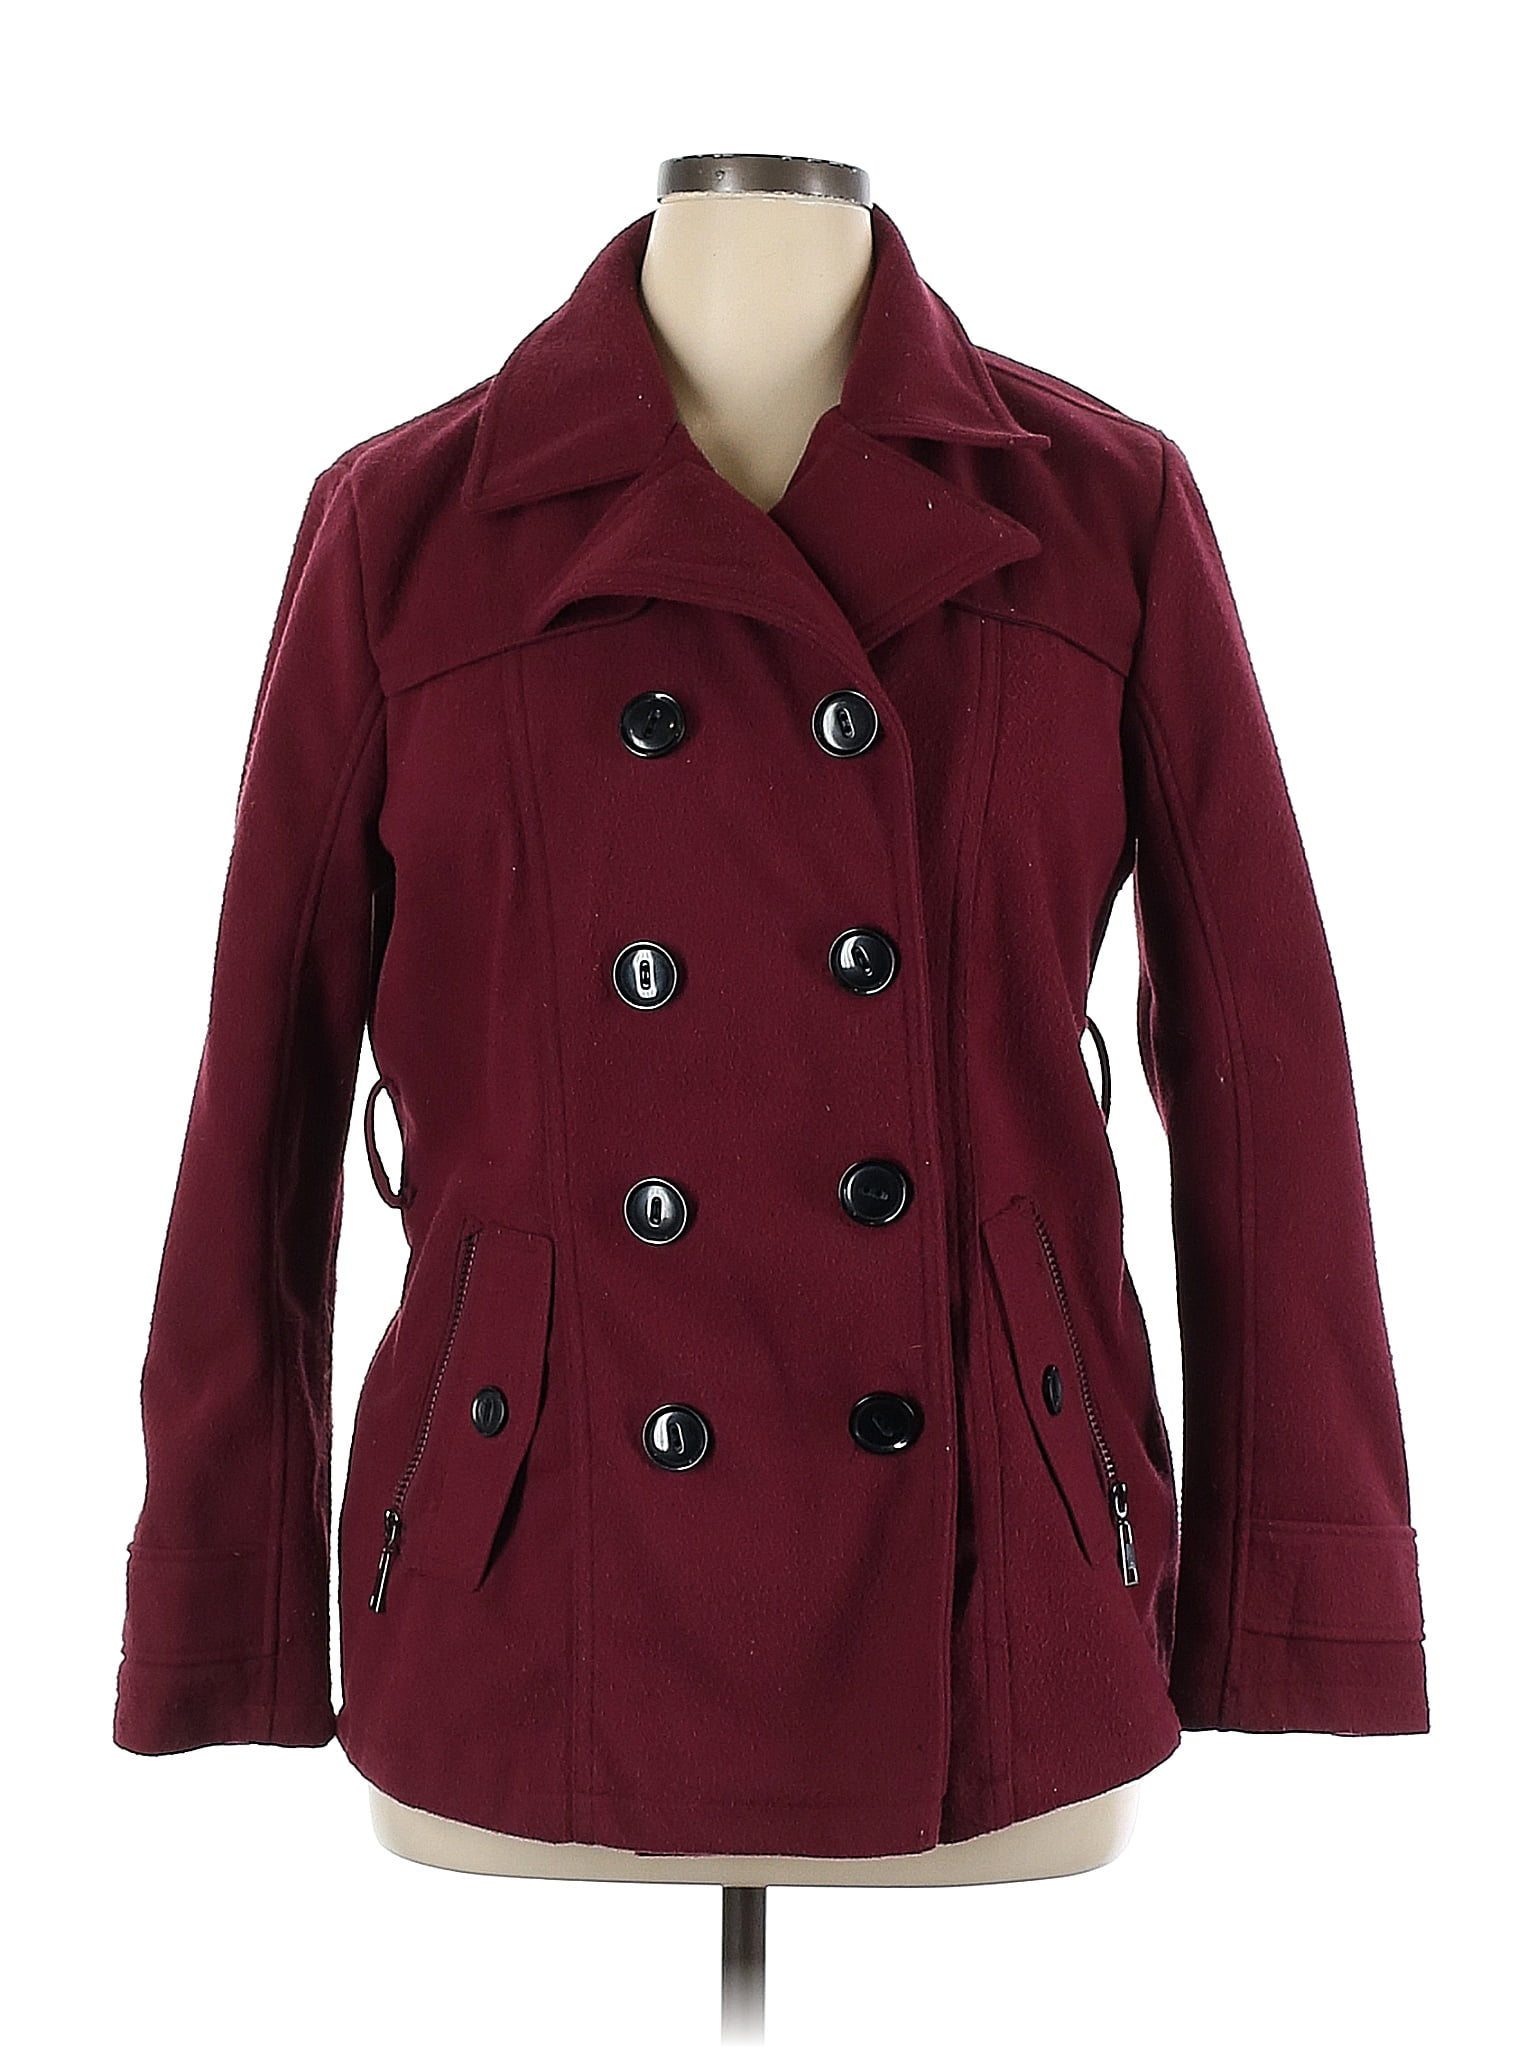 Urban Republic 100% Polyester Solid Burgundy Coat Size XL - 70% off ...